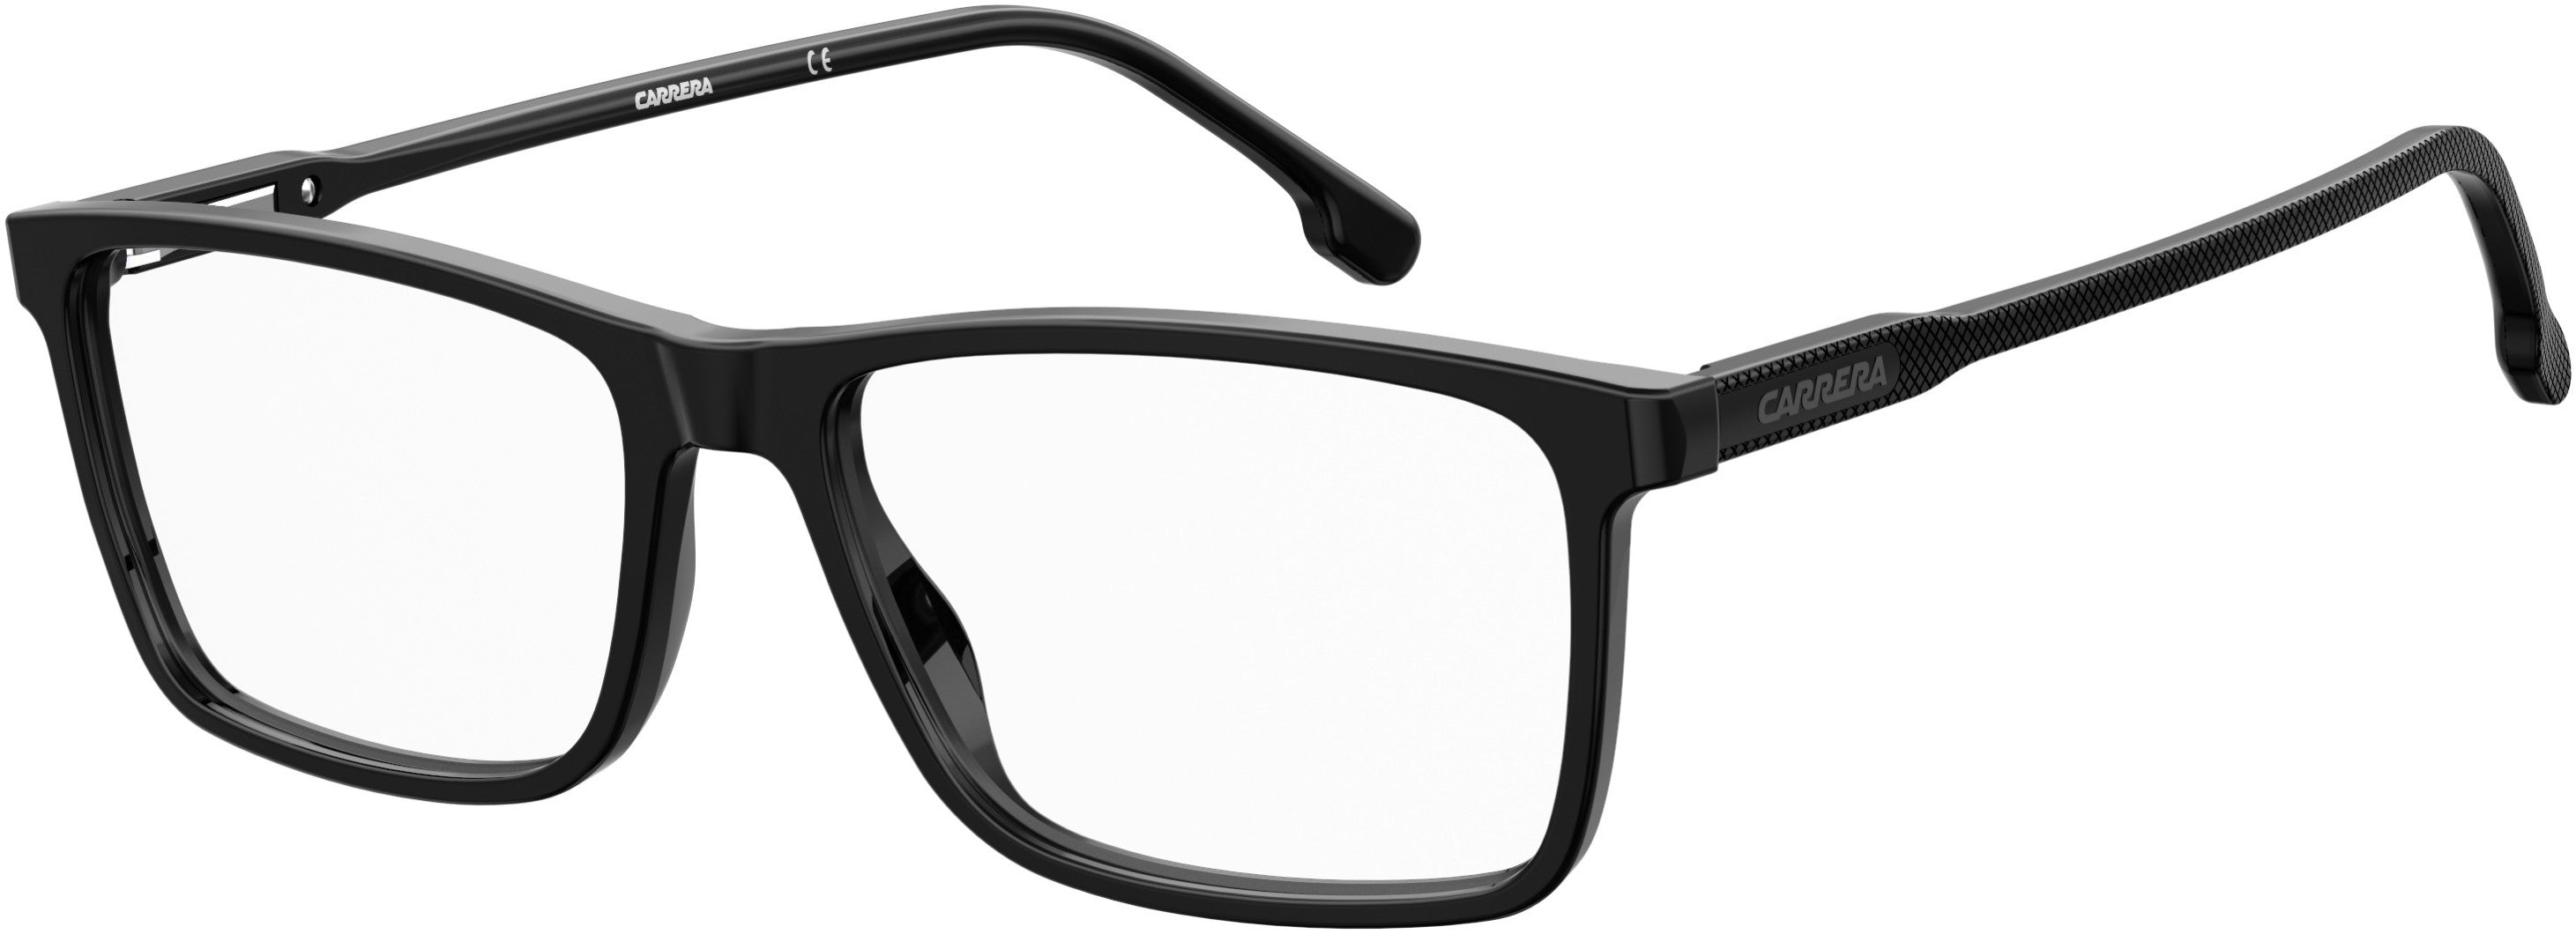  Carrera 225 Rectangular Eyeglasses 0807-0807  Black (00 Demo Lens)